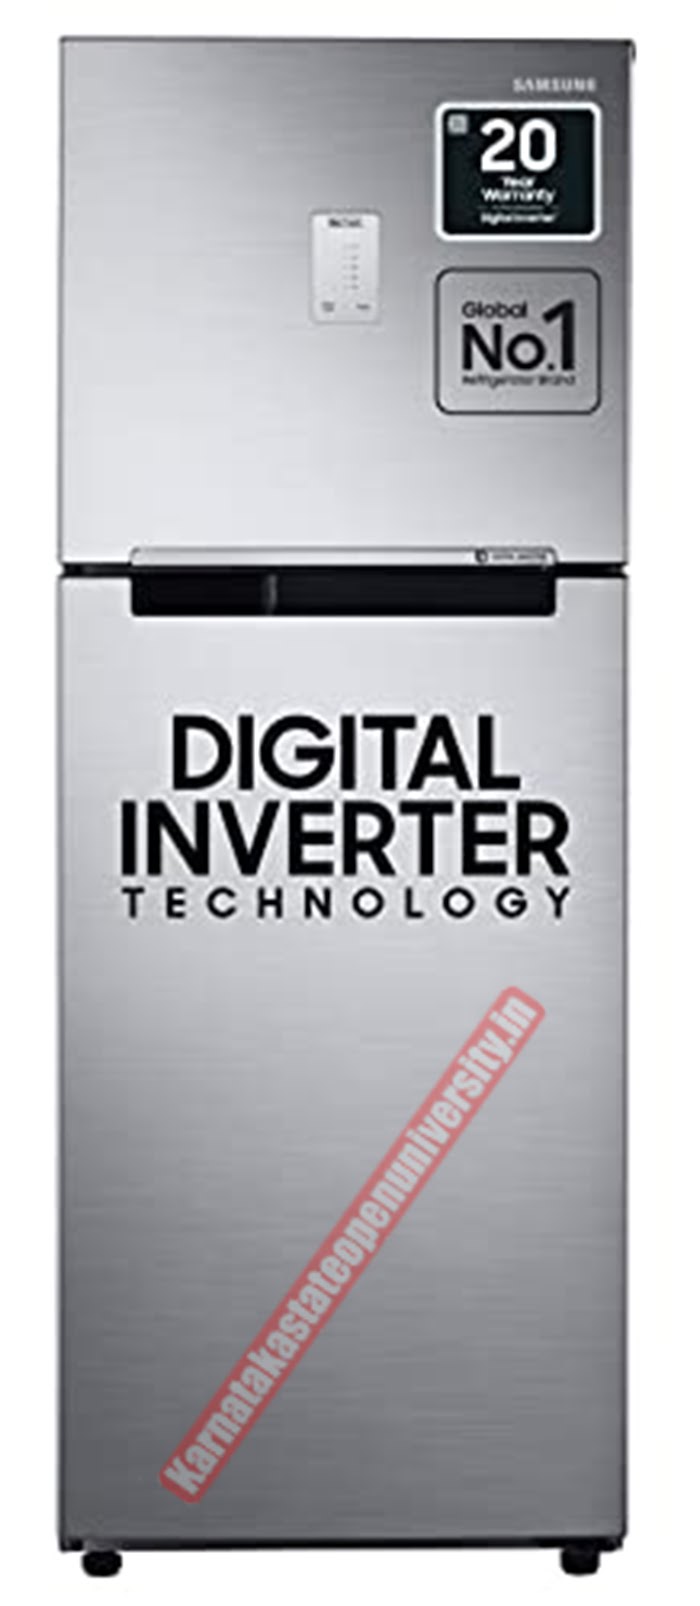 Samsung 253 L 3 Star Inverter Frost-Free Double Door Refrigerator